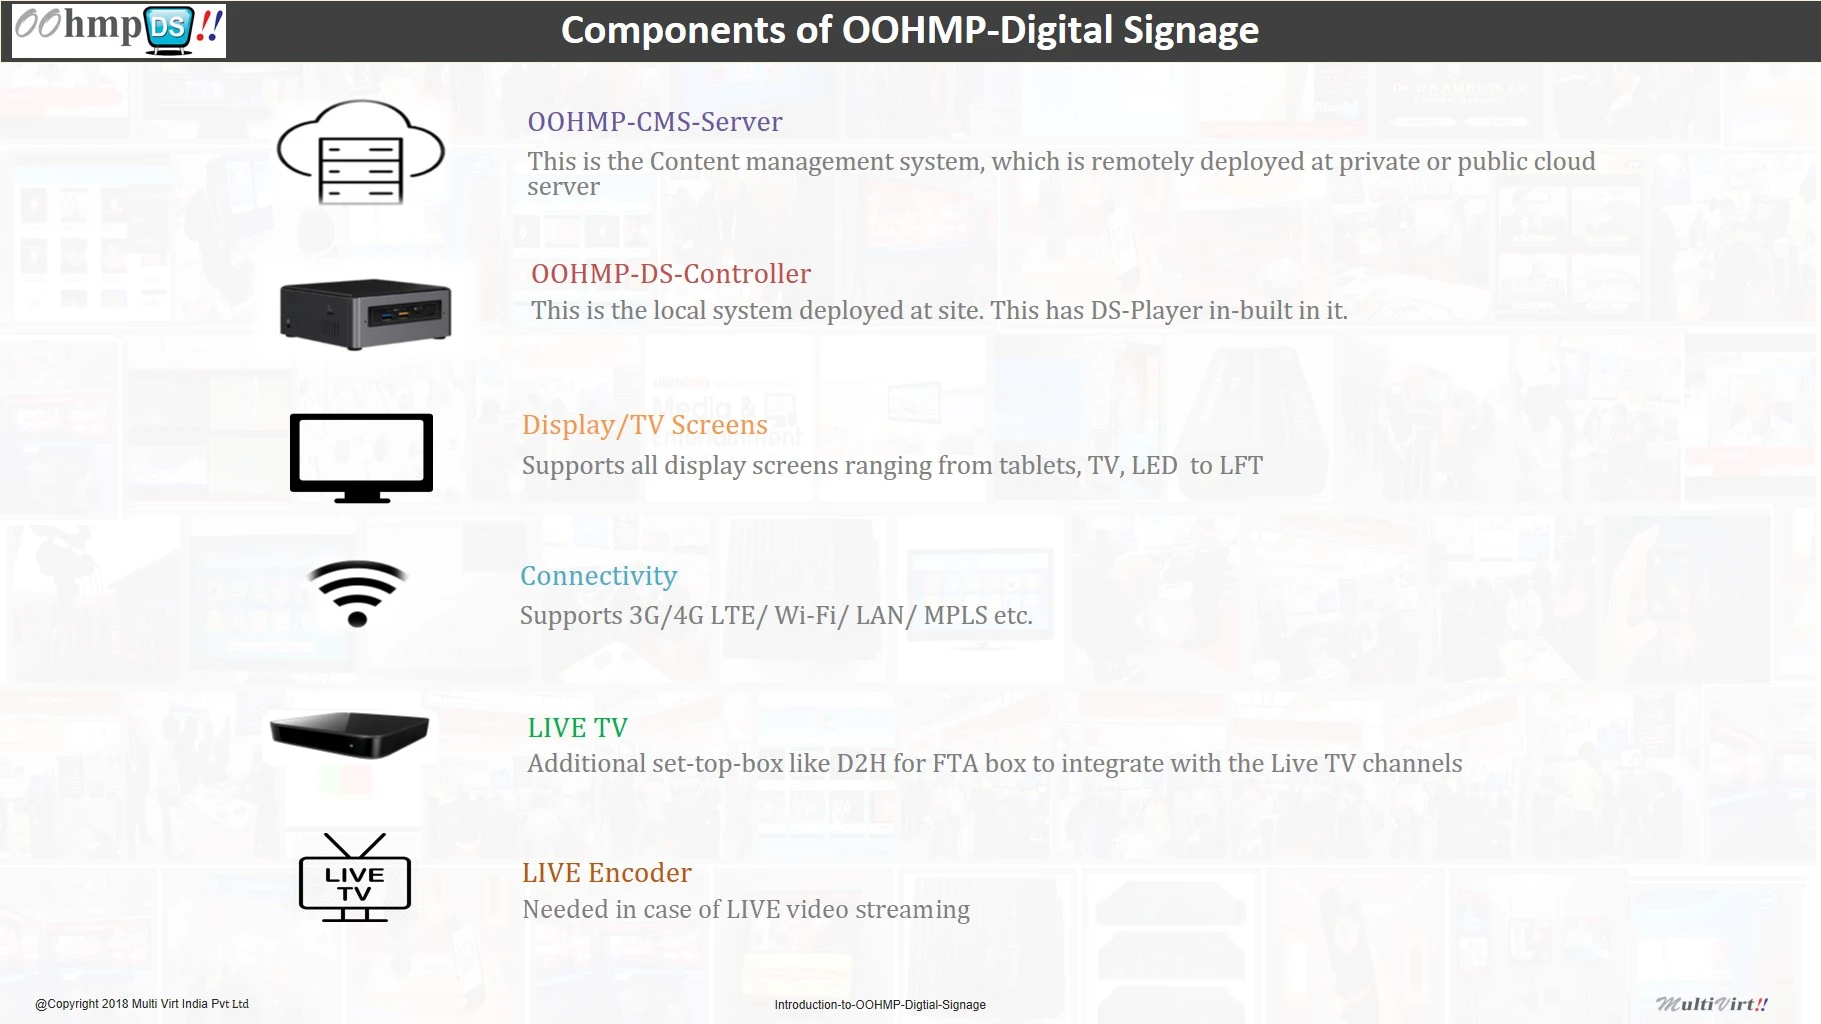 Components of digital signage